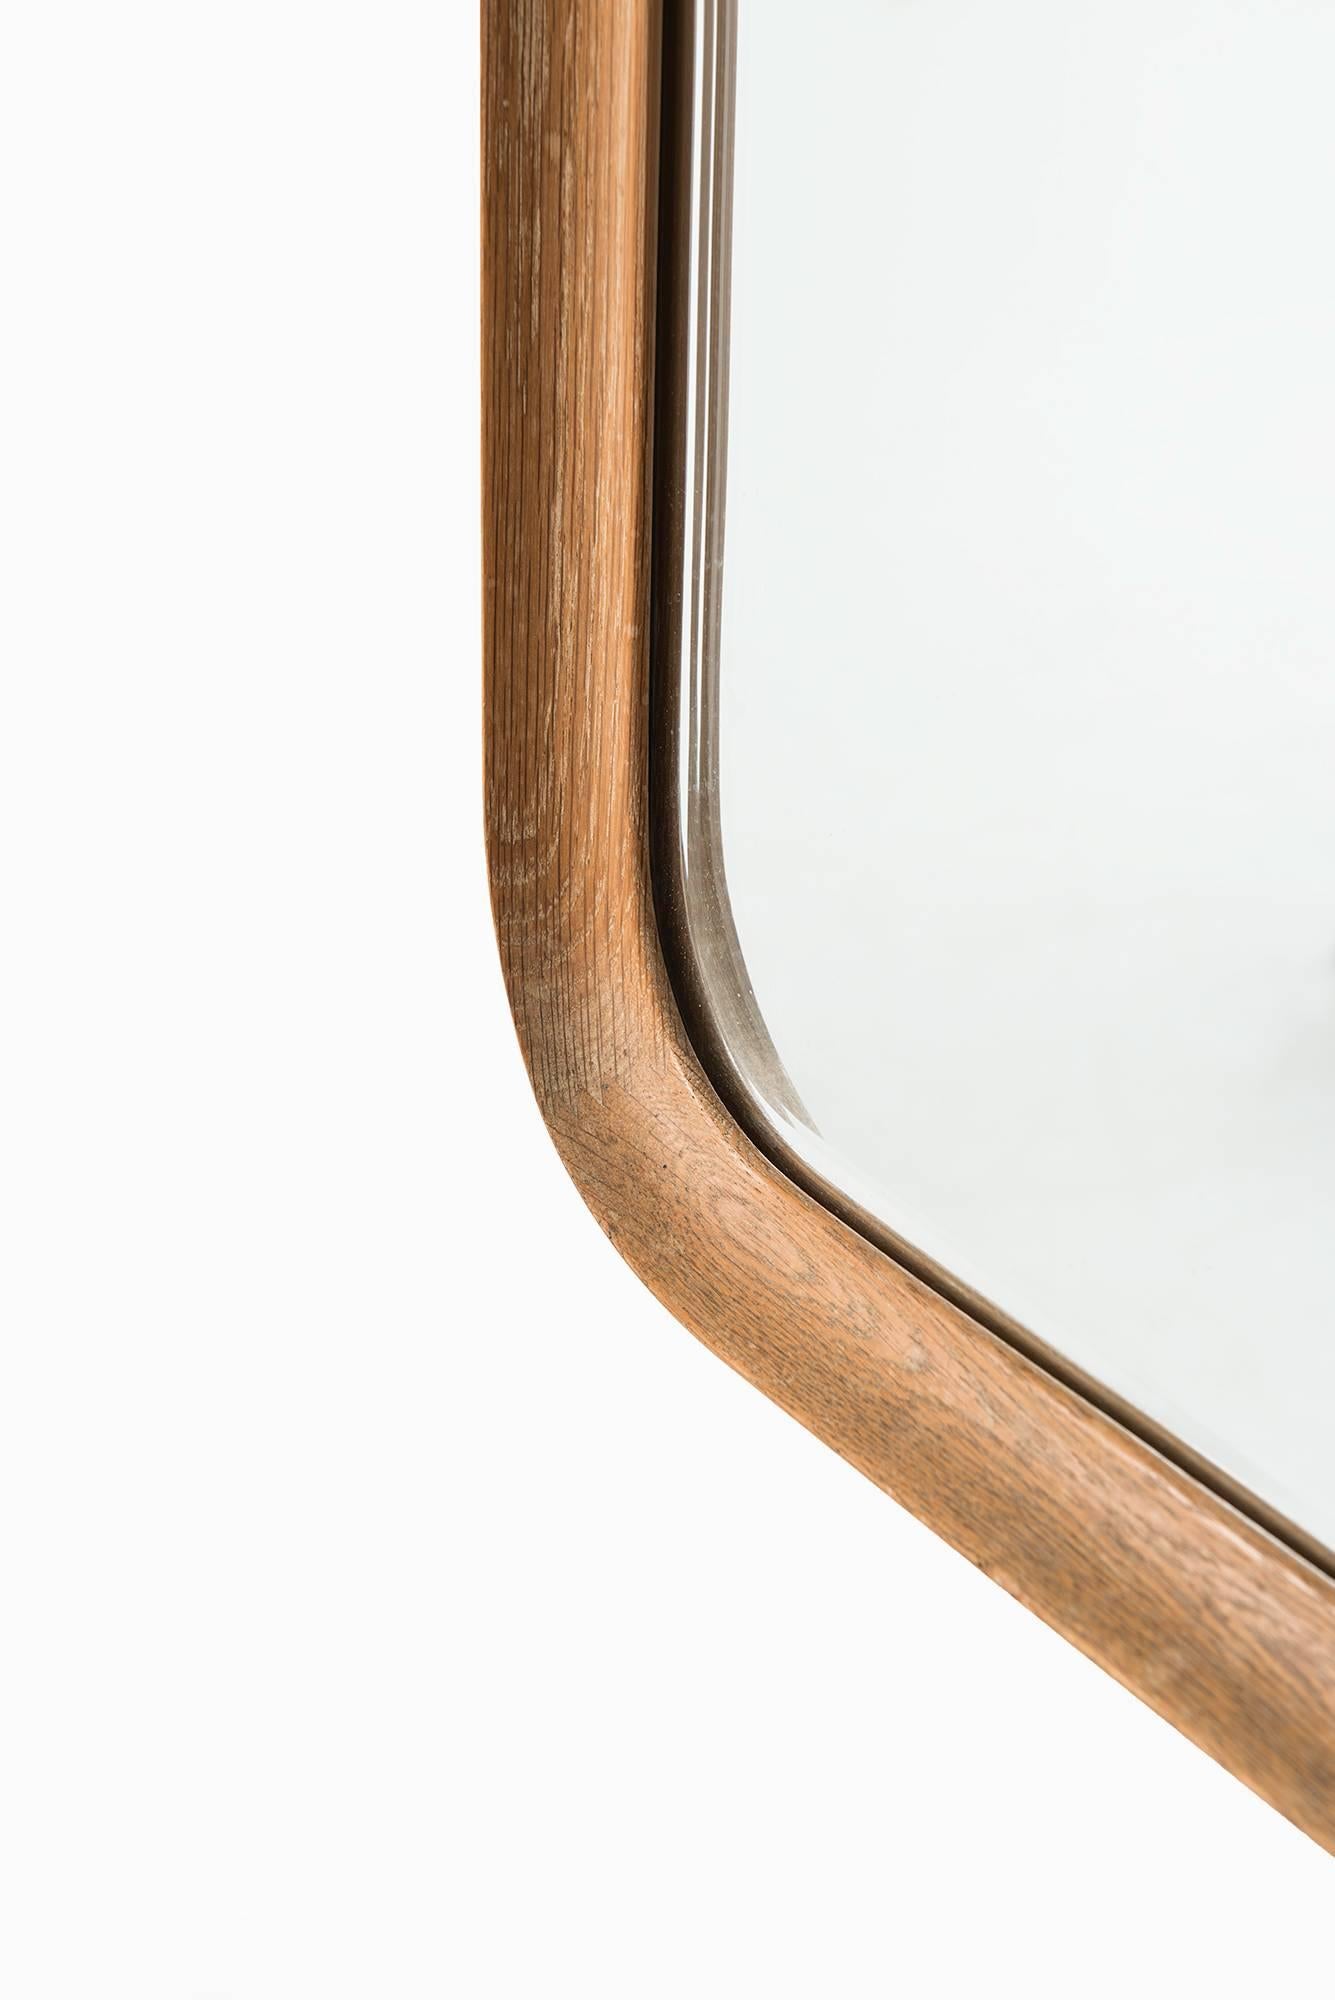 Mirror in whitewashed oak produced by Fröseke, AB Nybrofabriken in Sweden.